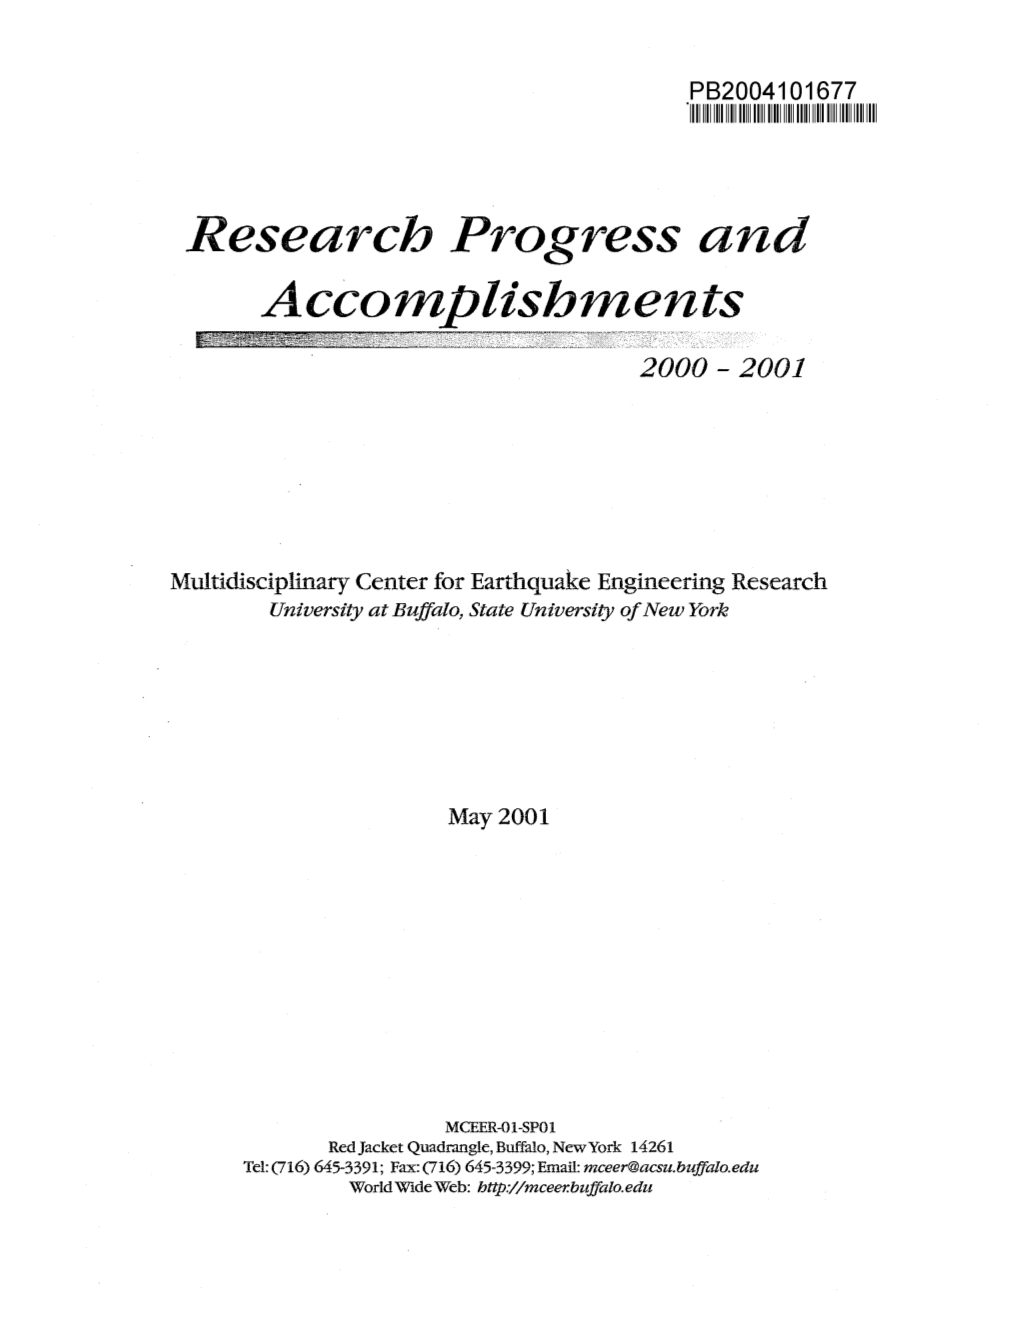 Research Progress and Accomplishments 2000 - 2001